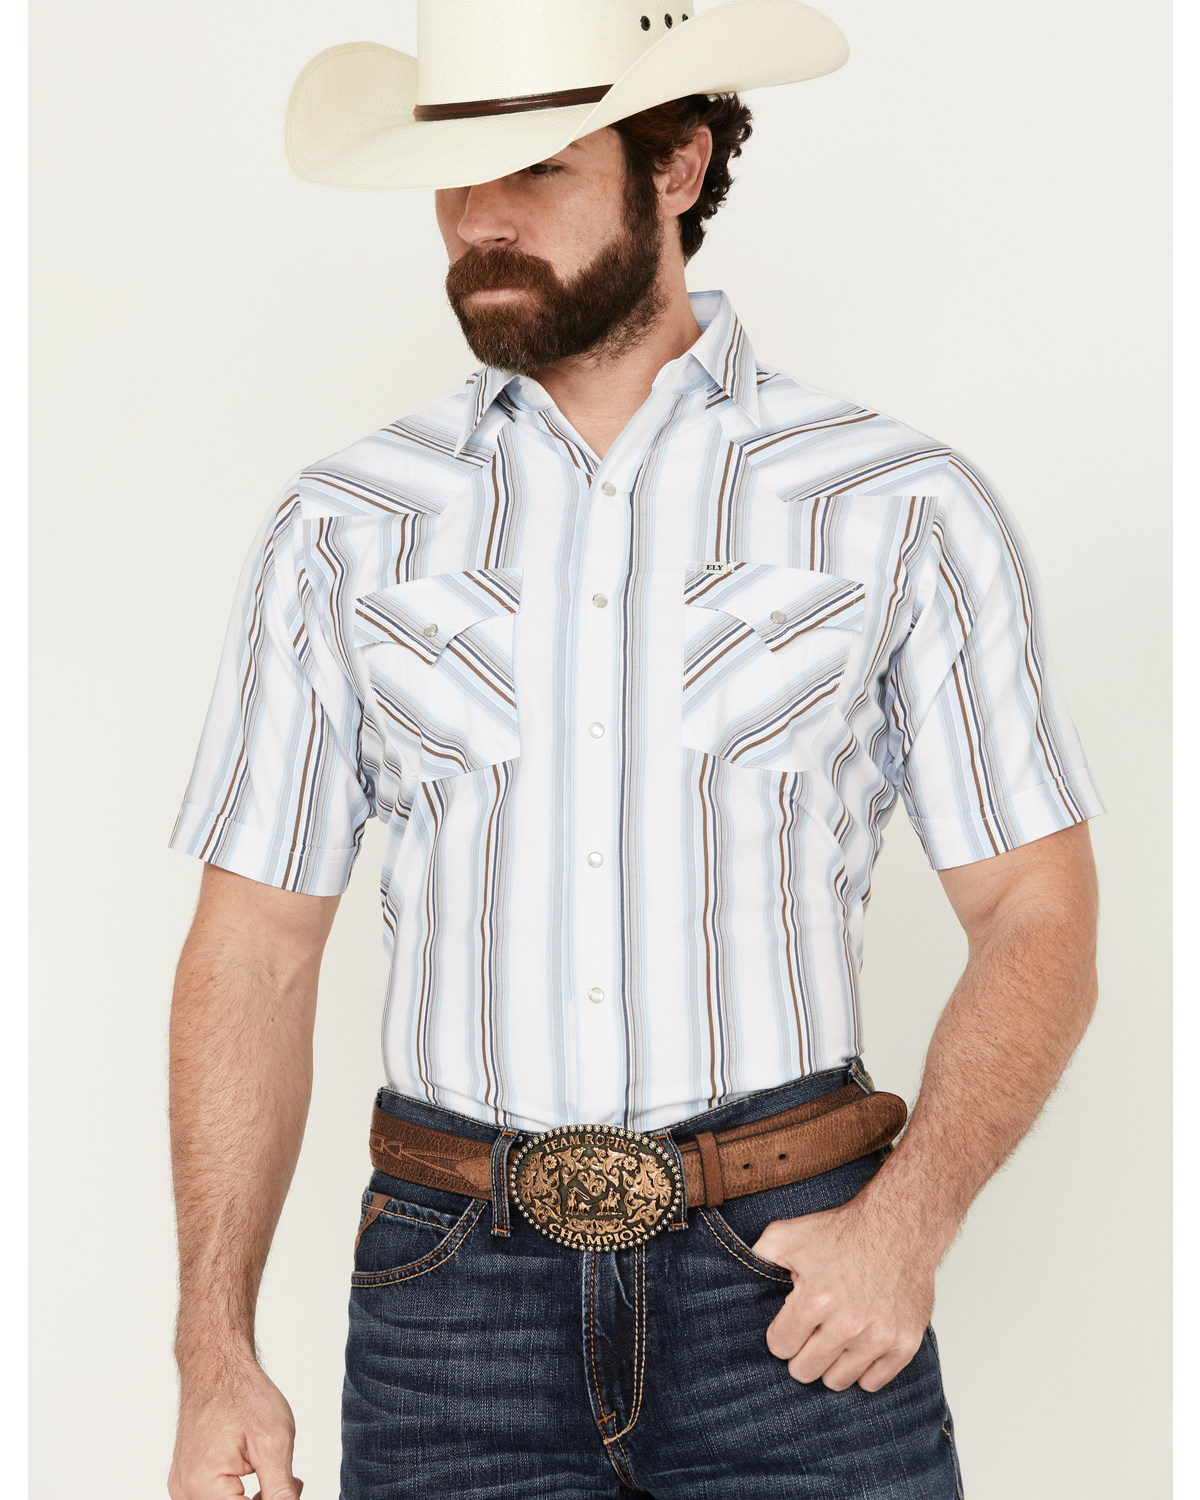 Ely Walker Men's Striped Print Short Sleeve Snap Western Shirt